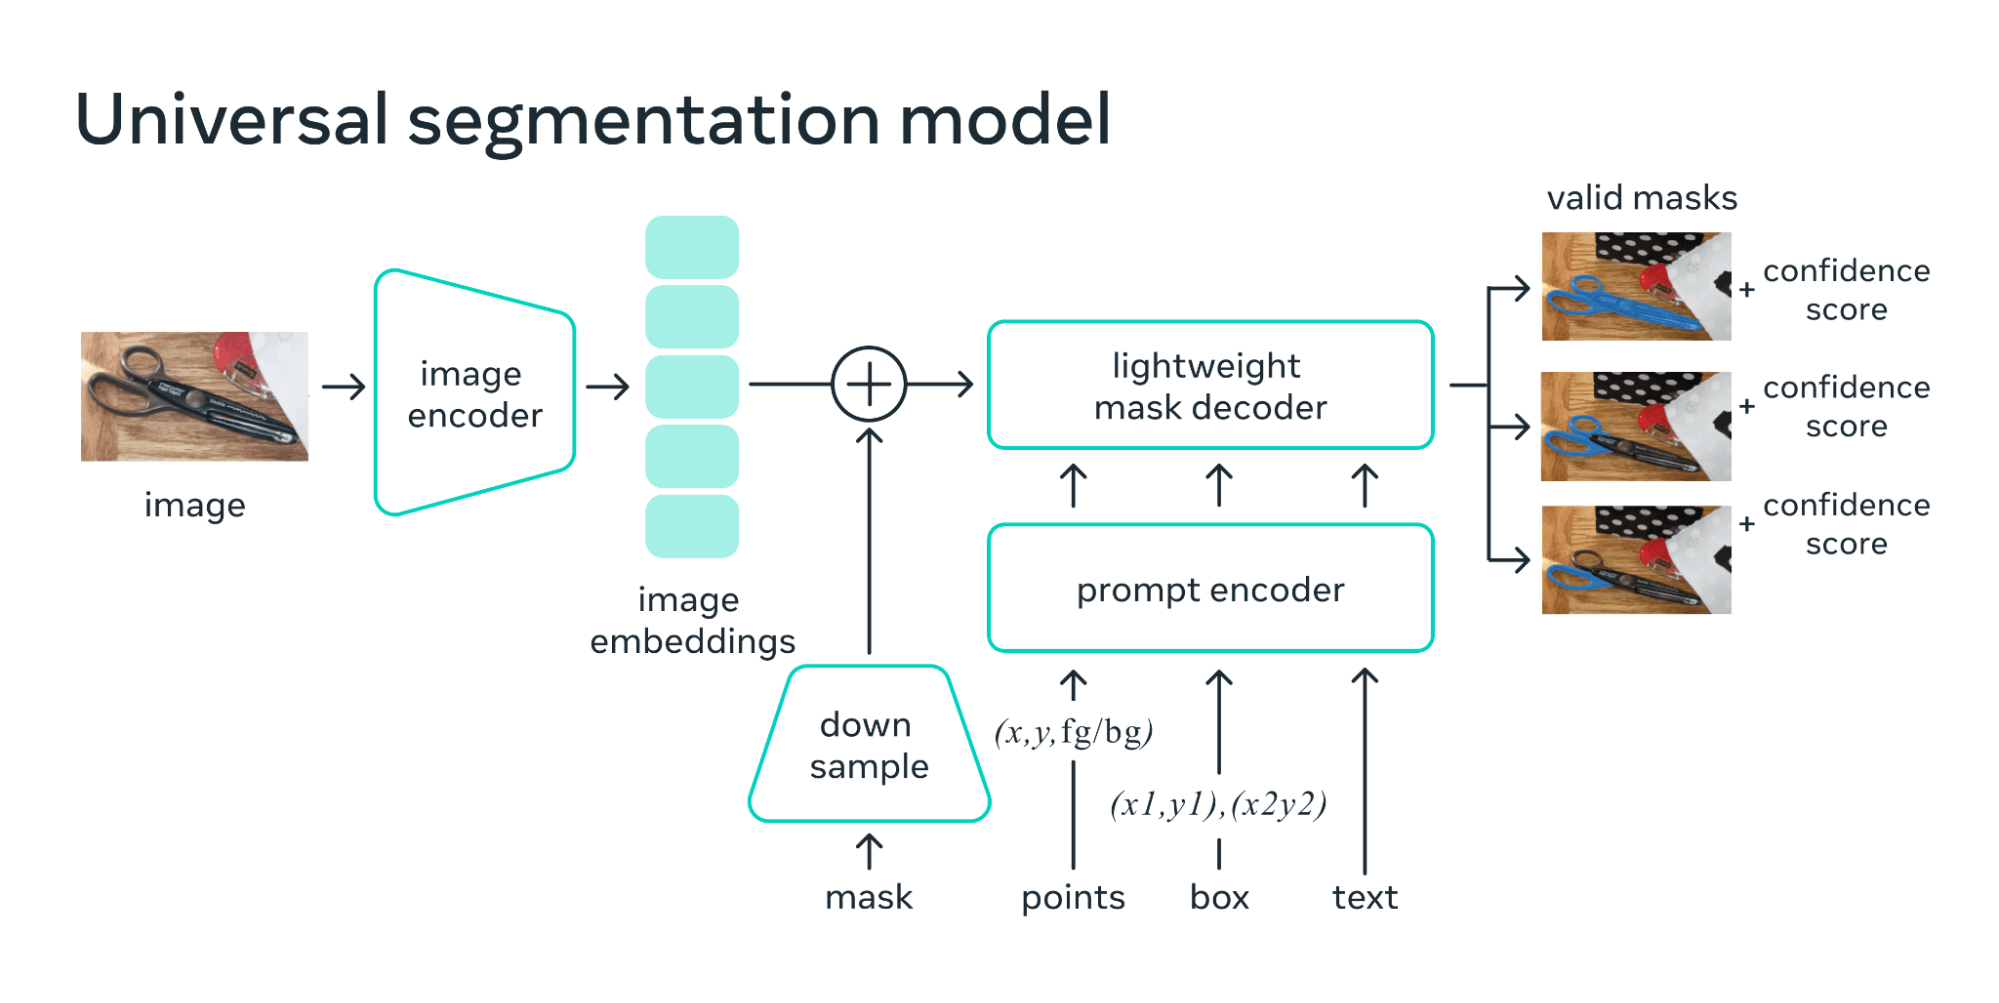 Universal segmentation model